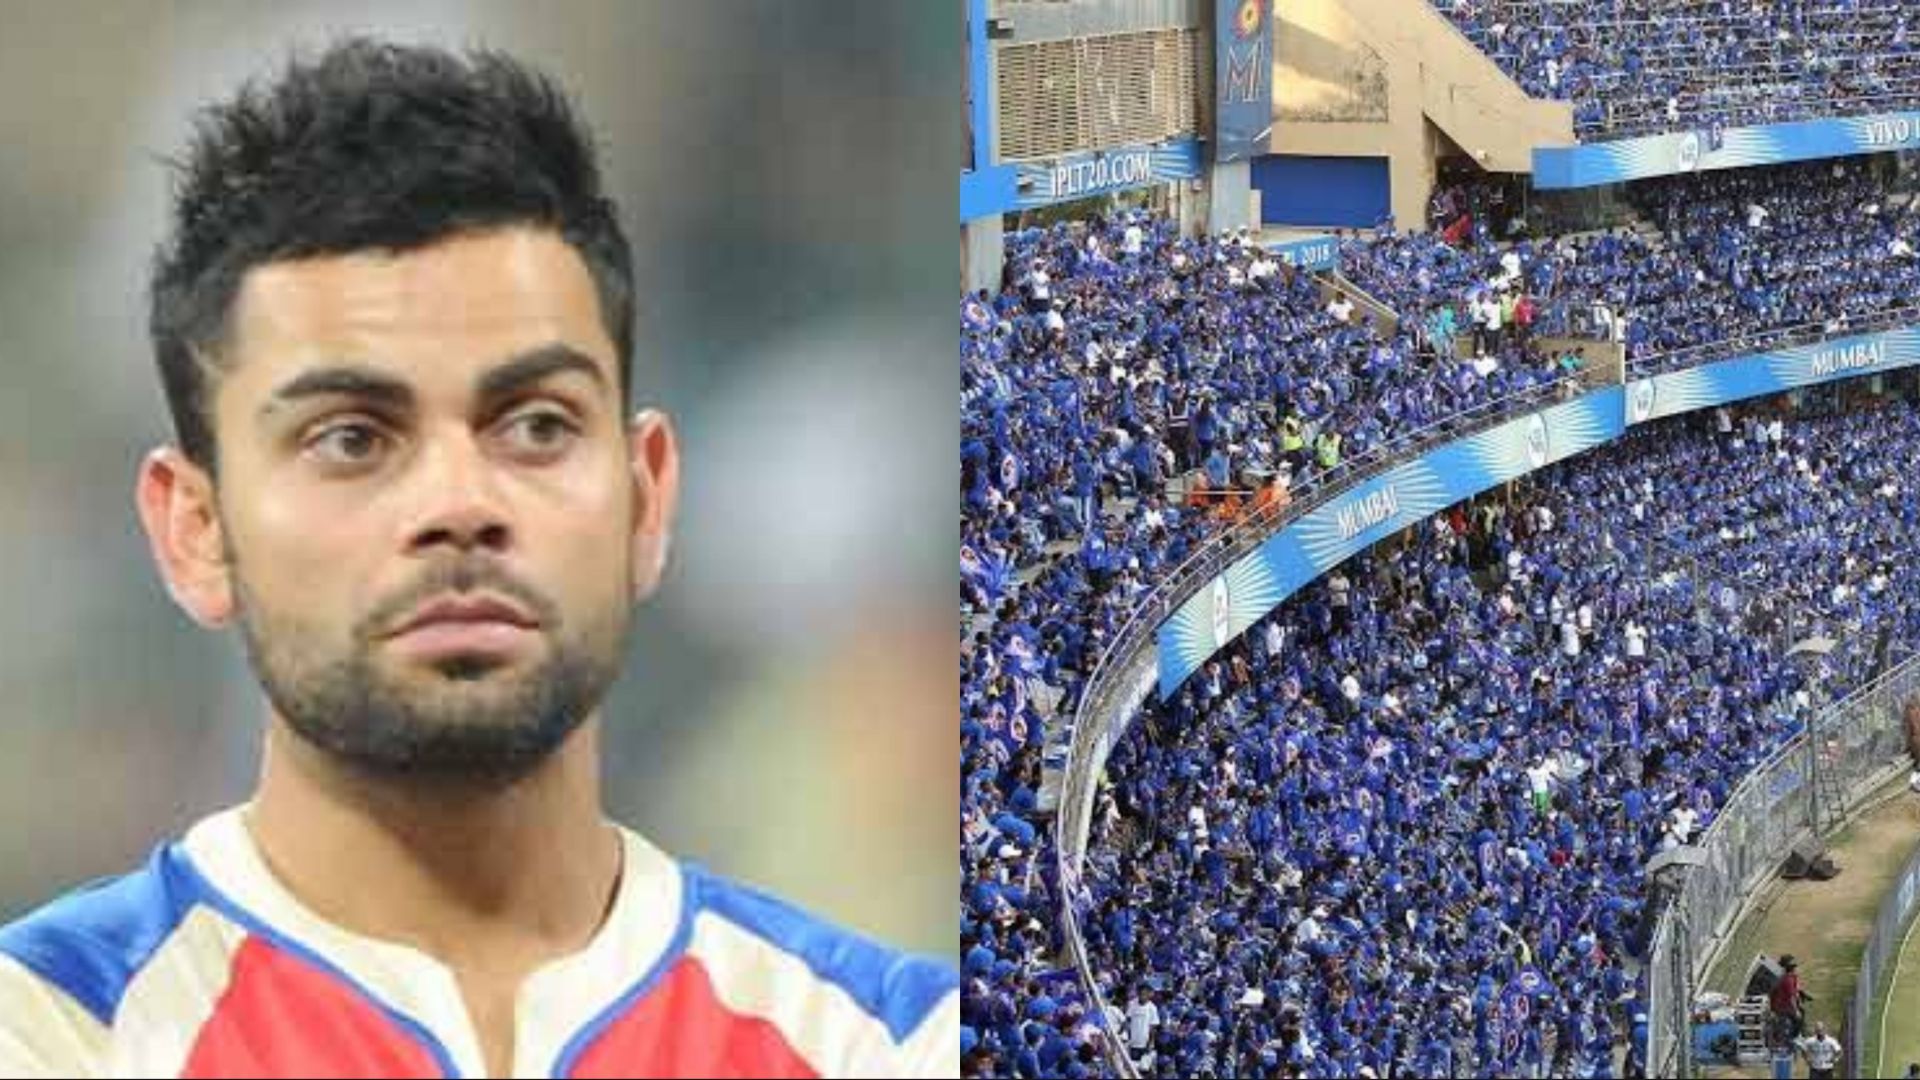 Virat Kohli was not happy with the way fans in Mumbai treated him